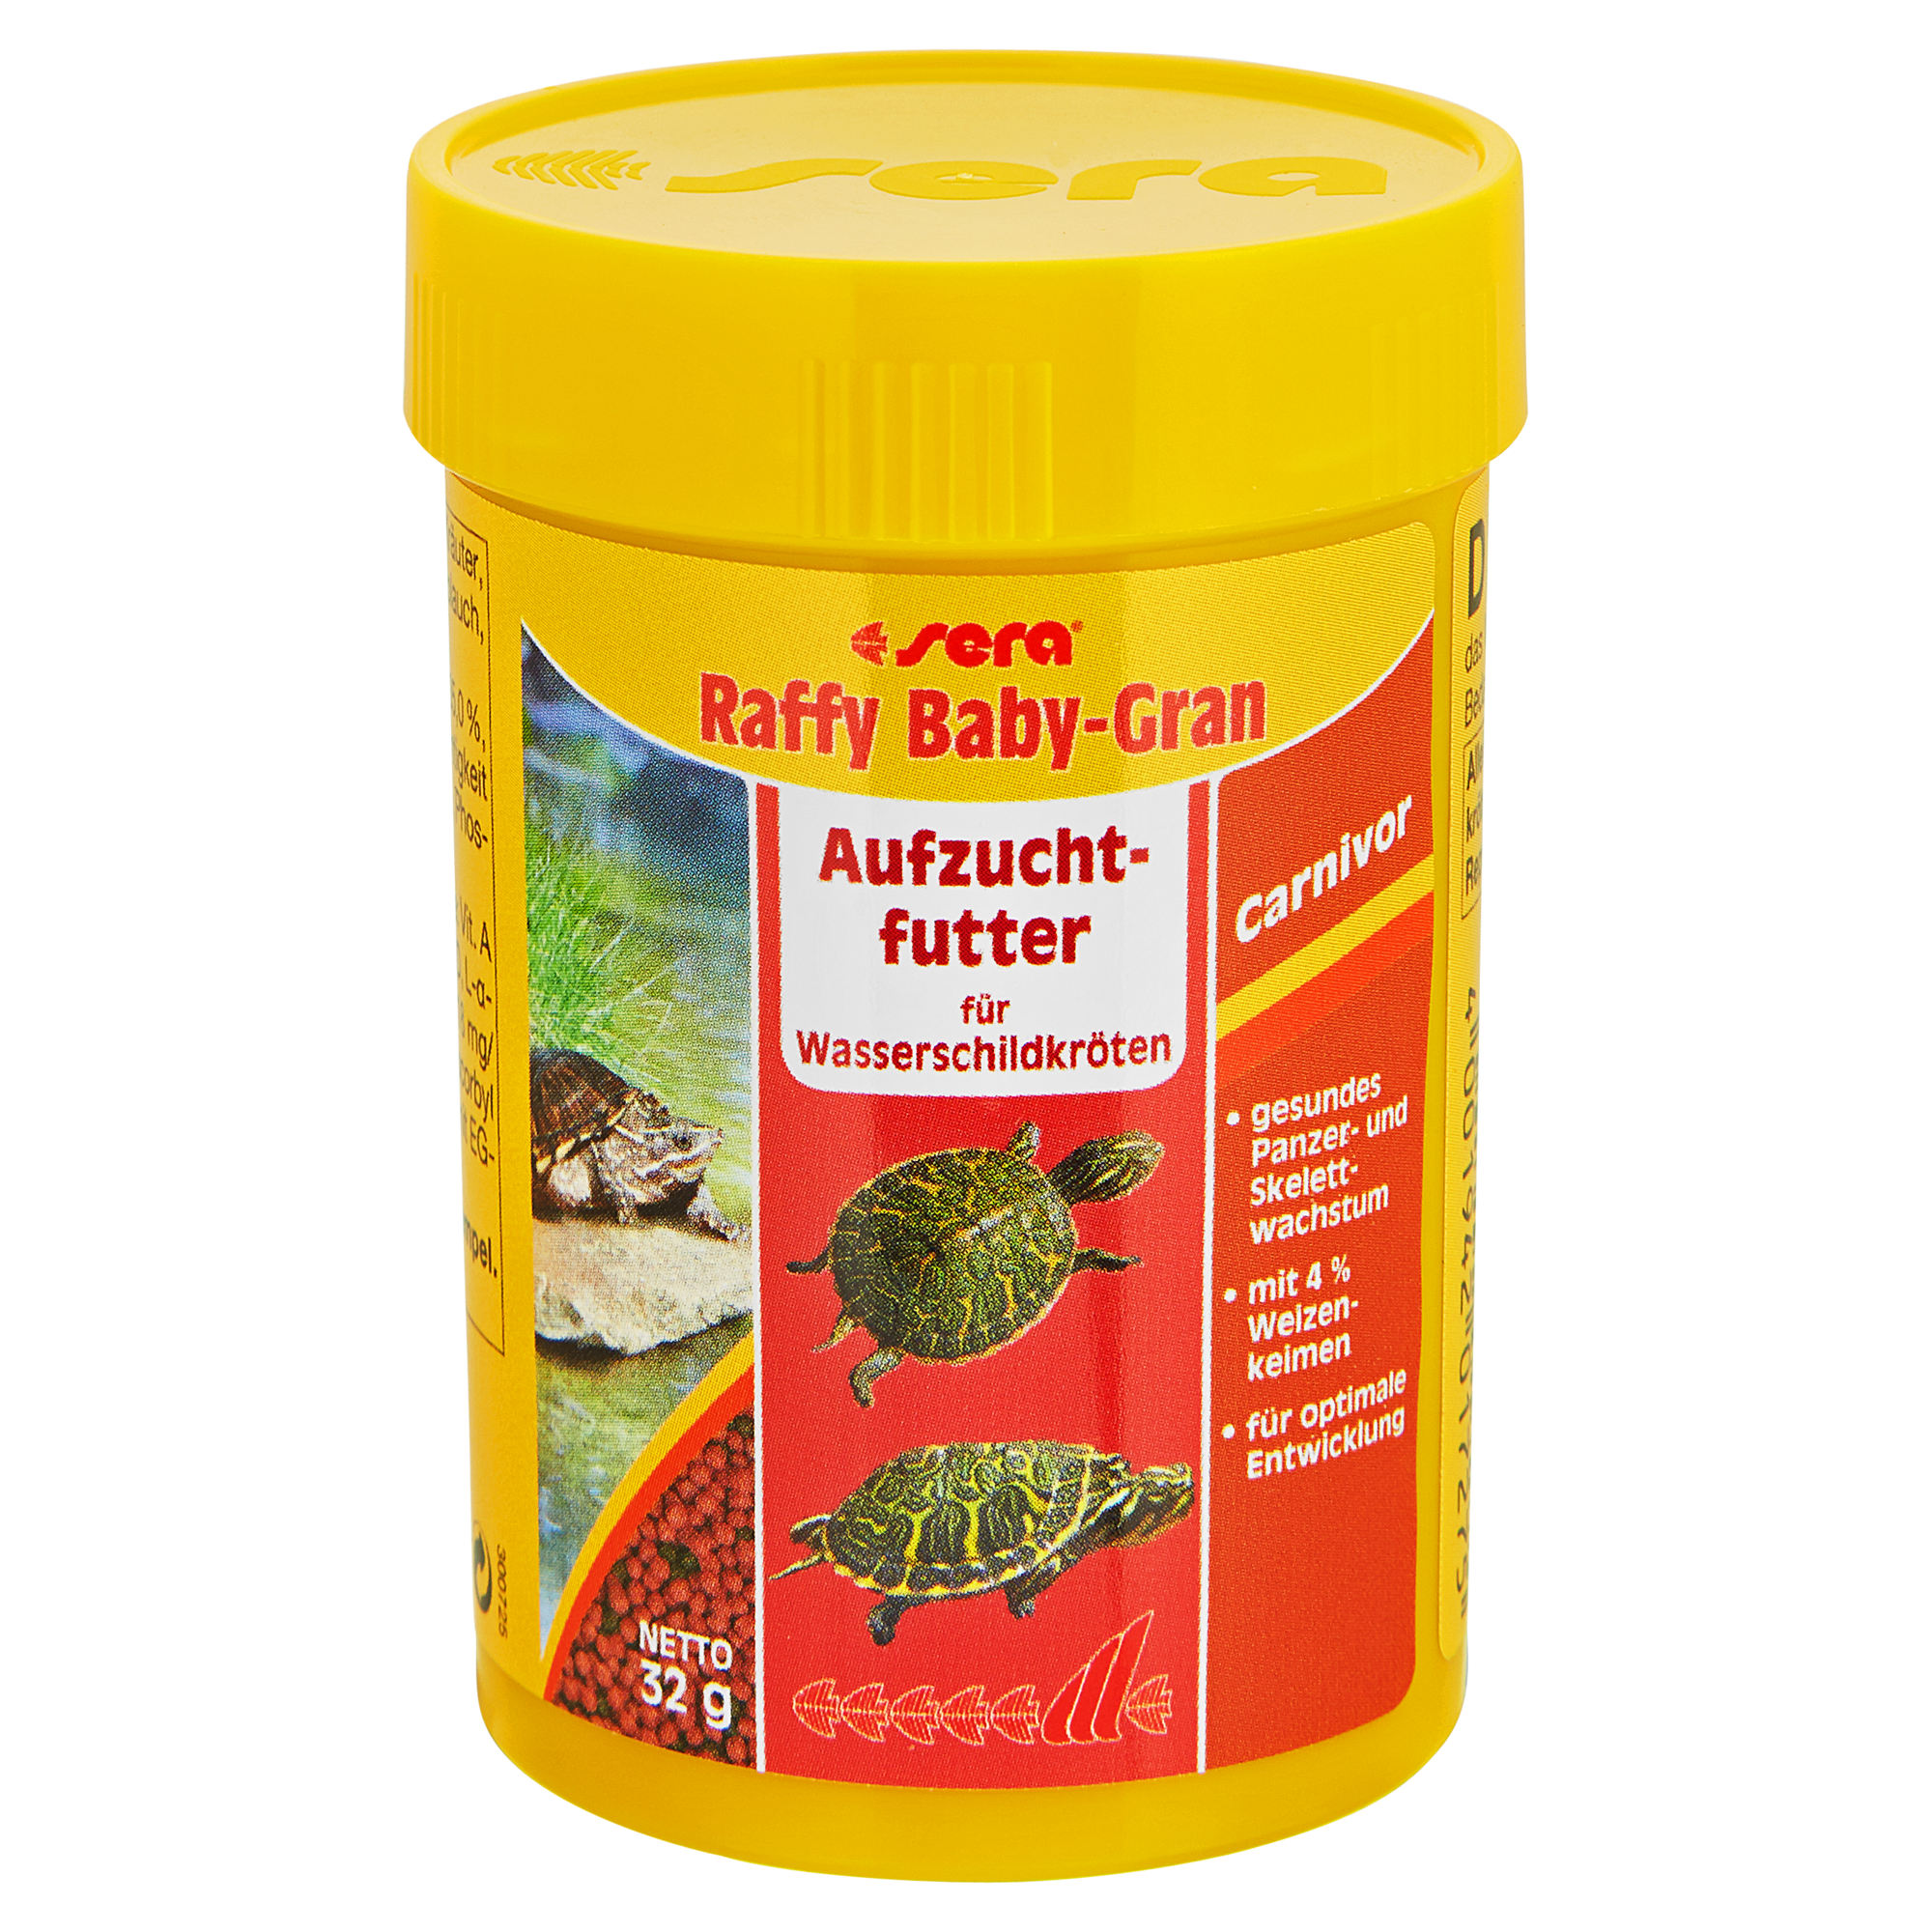 Reptilienfutter Wasserschildkröten Raffy Baby-Gran 32 g + product picture